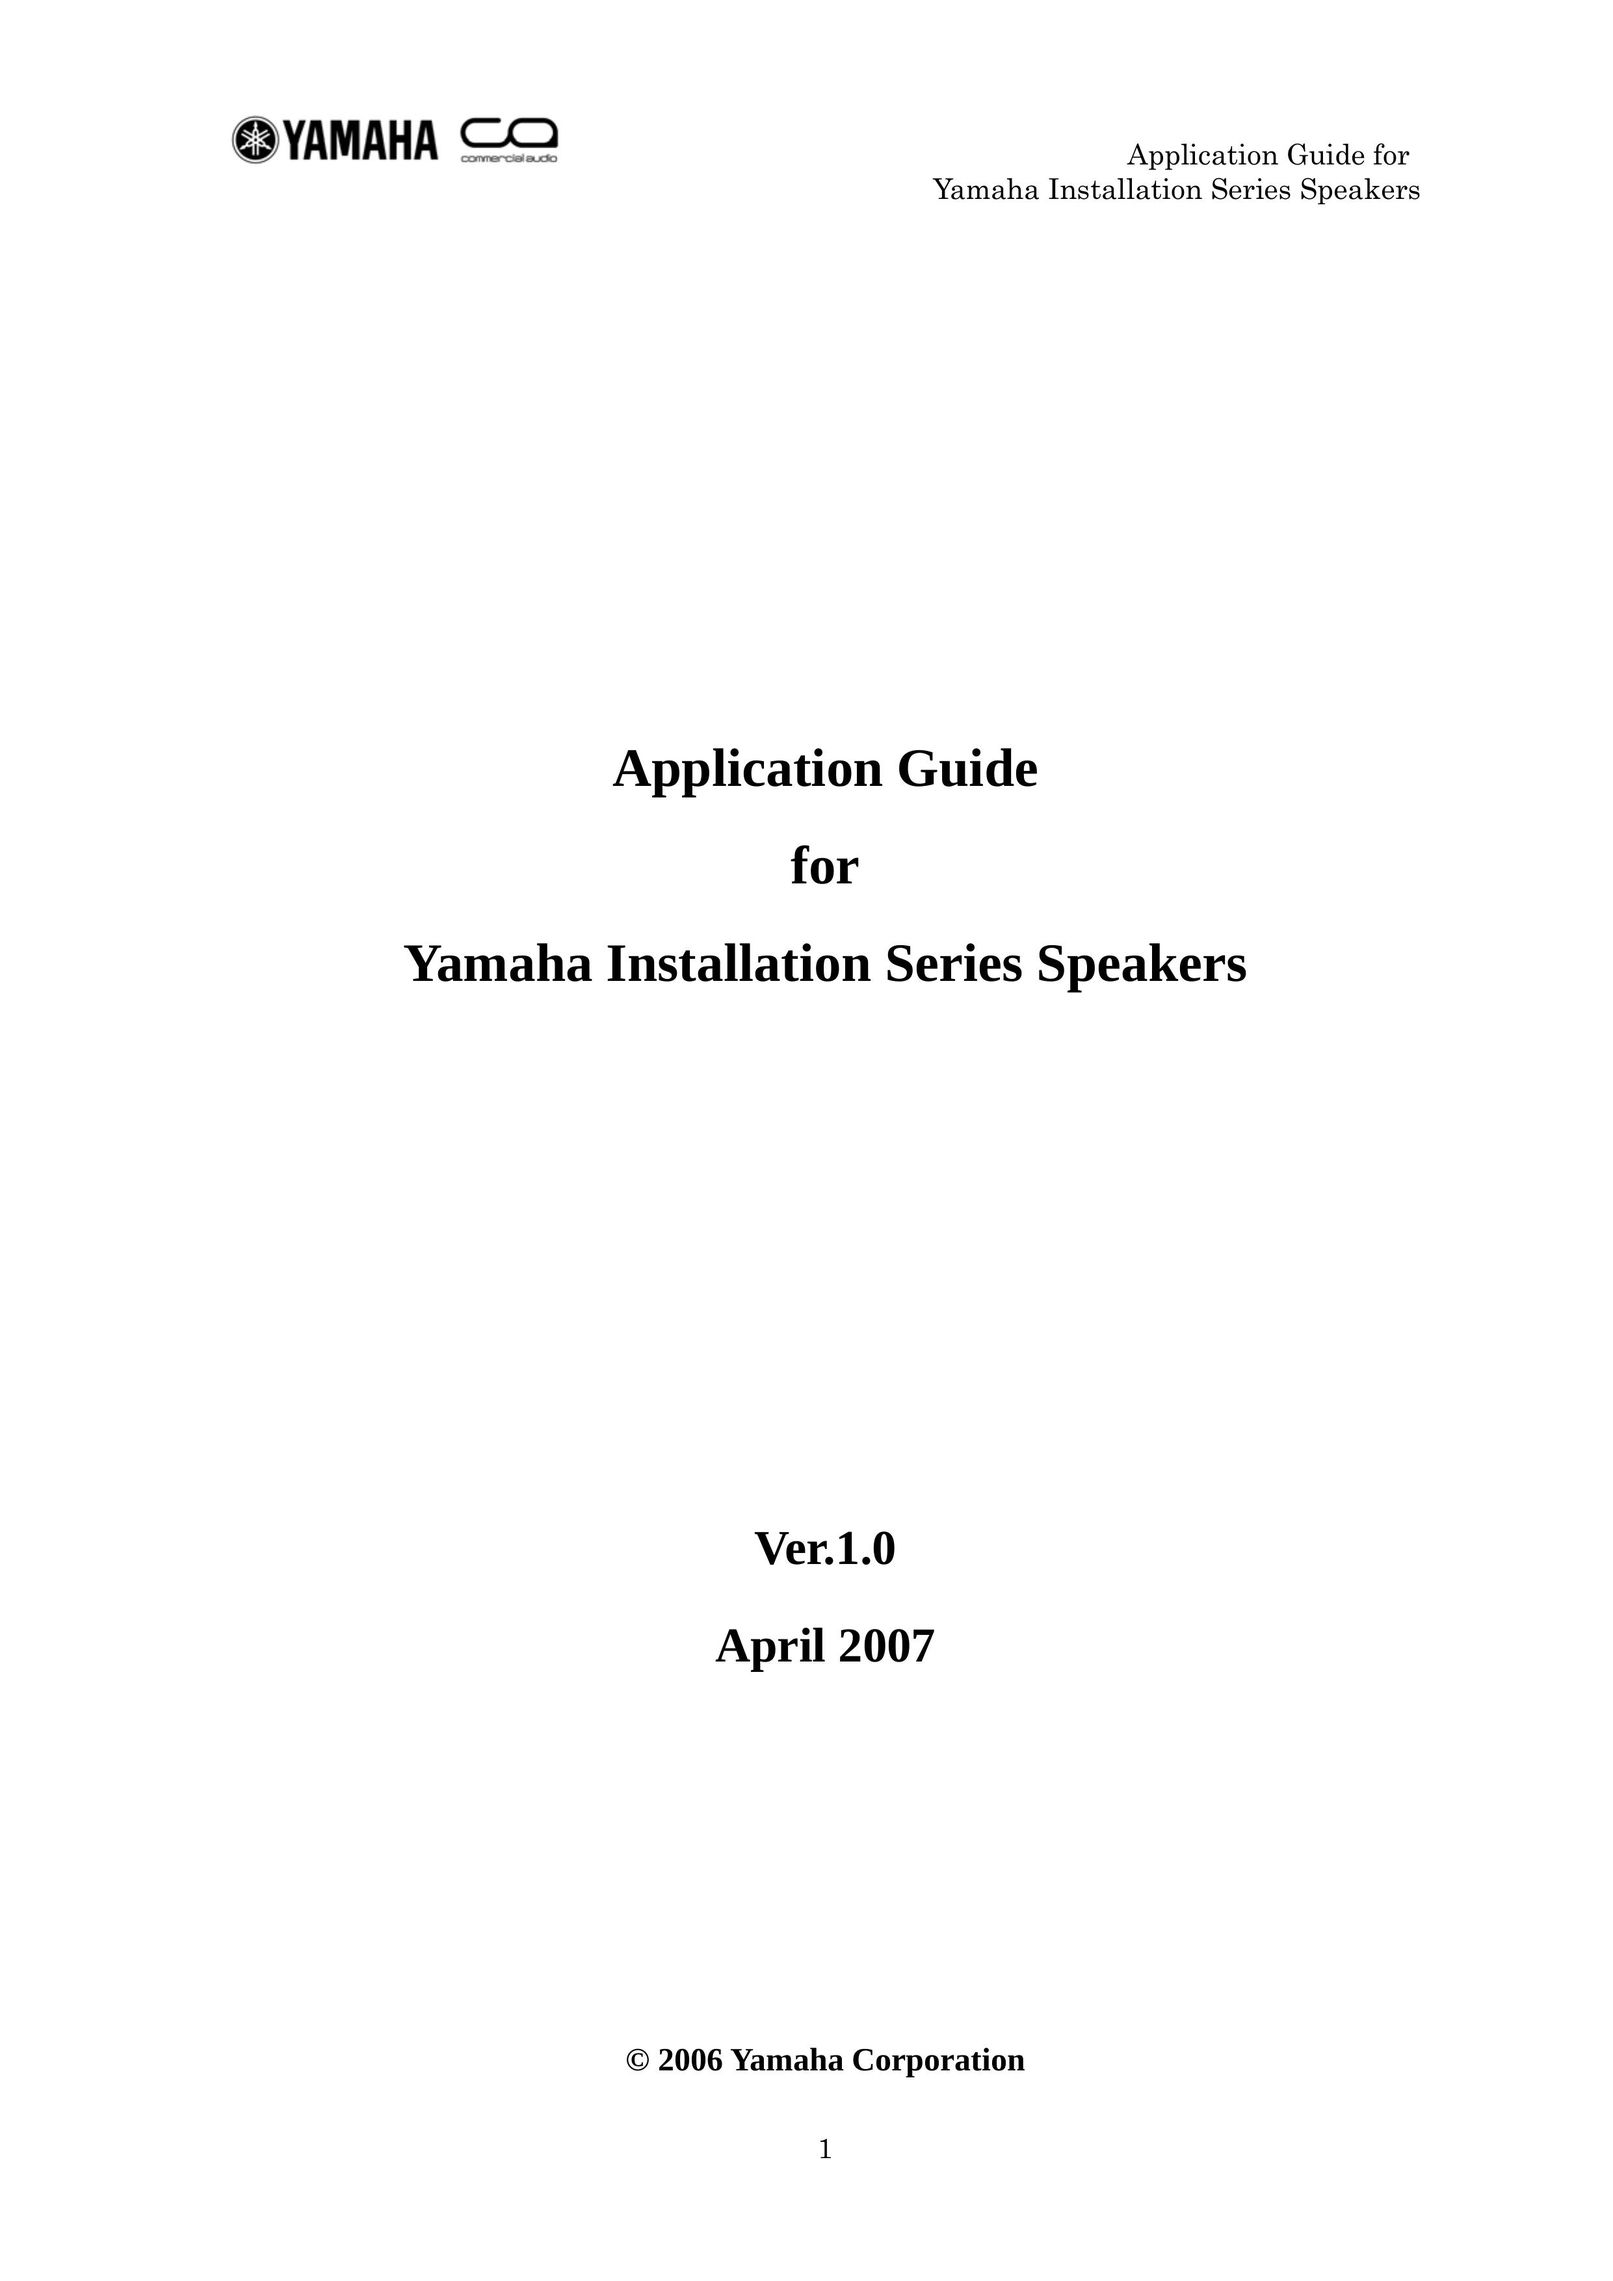 Yamaha IF2112 Speaker User Manual